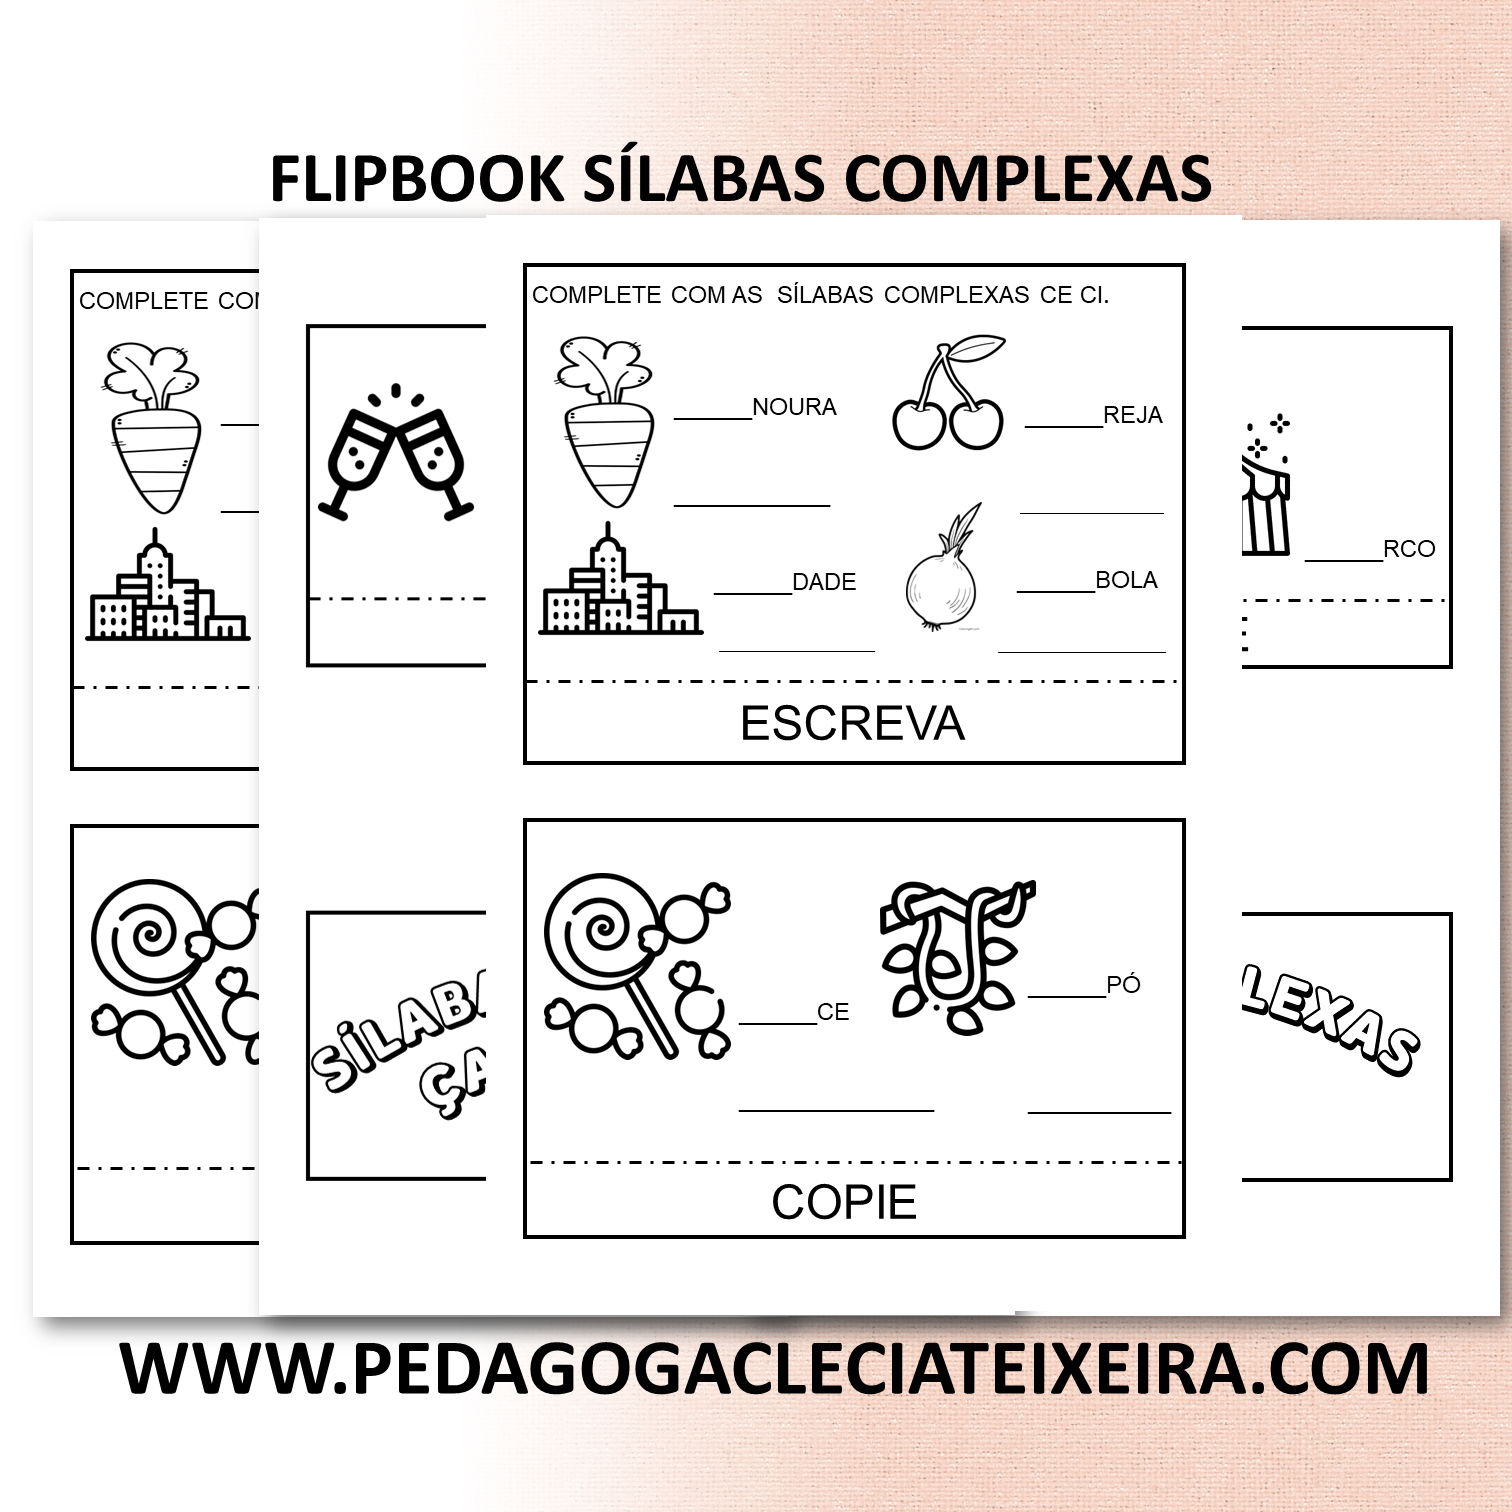 Flipbook sílabas complexas